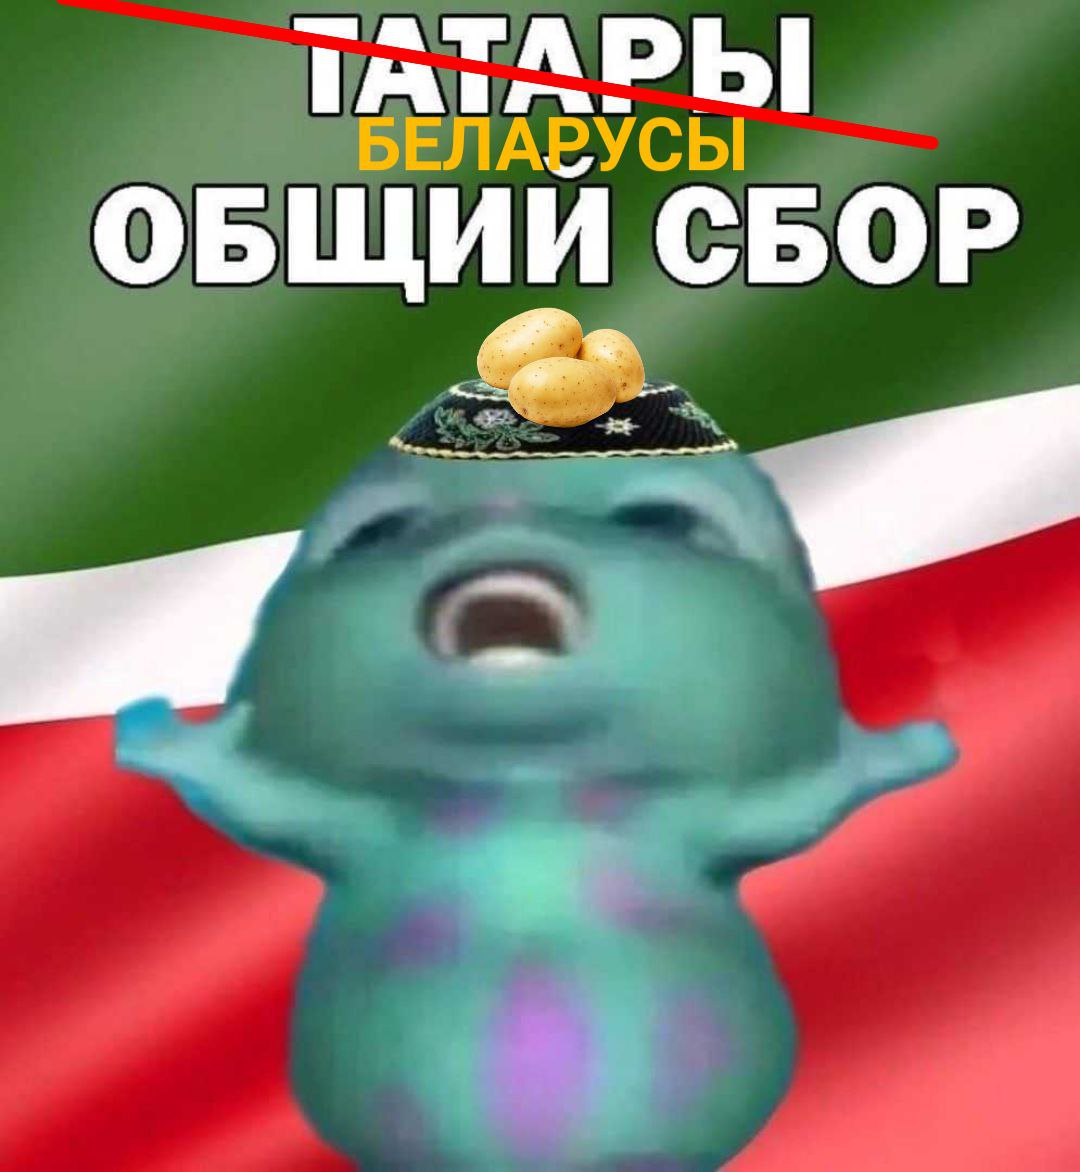 Мемы про татар